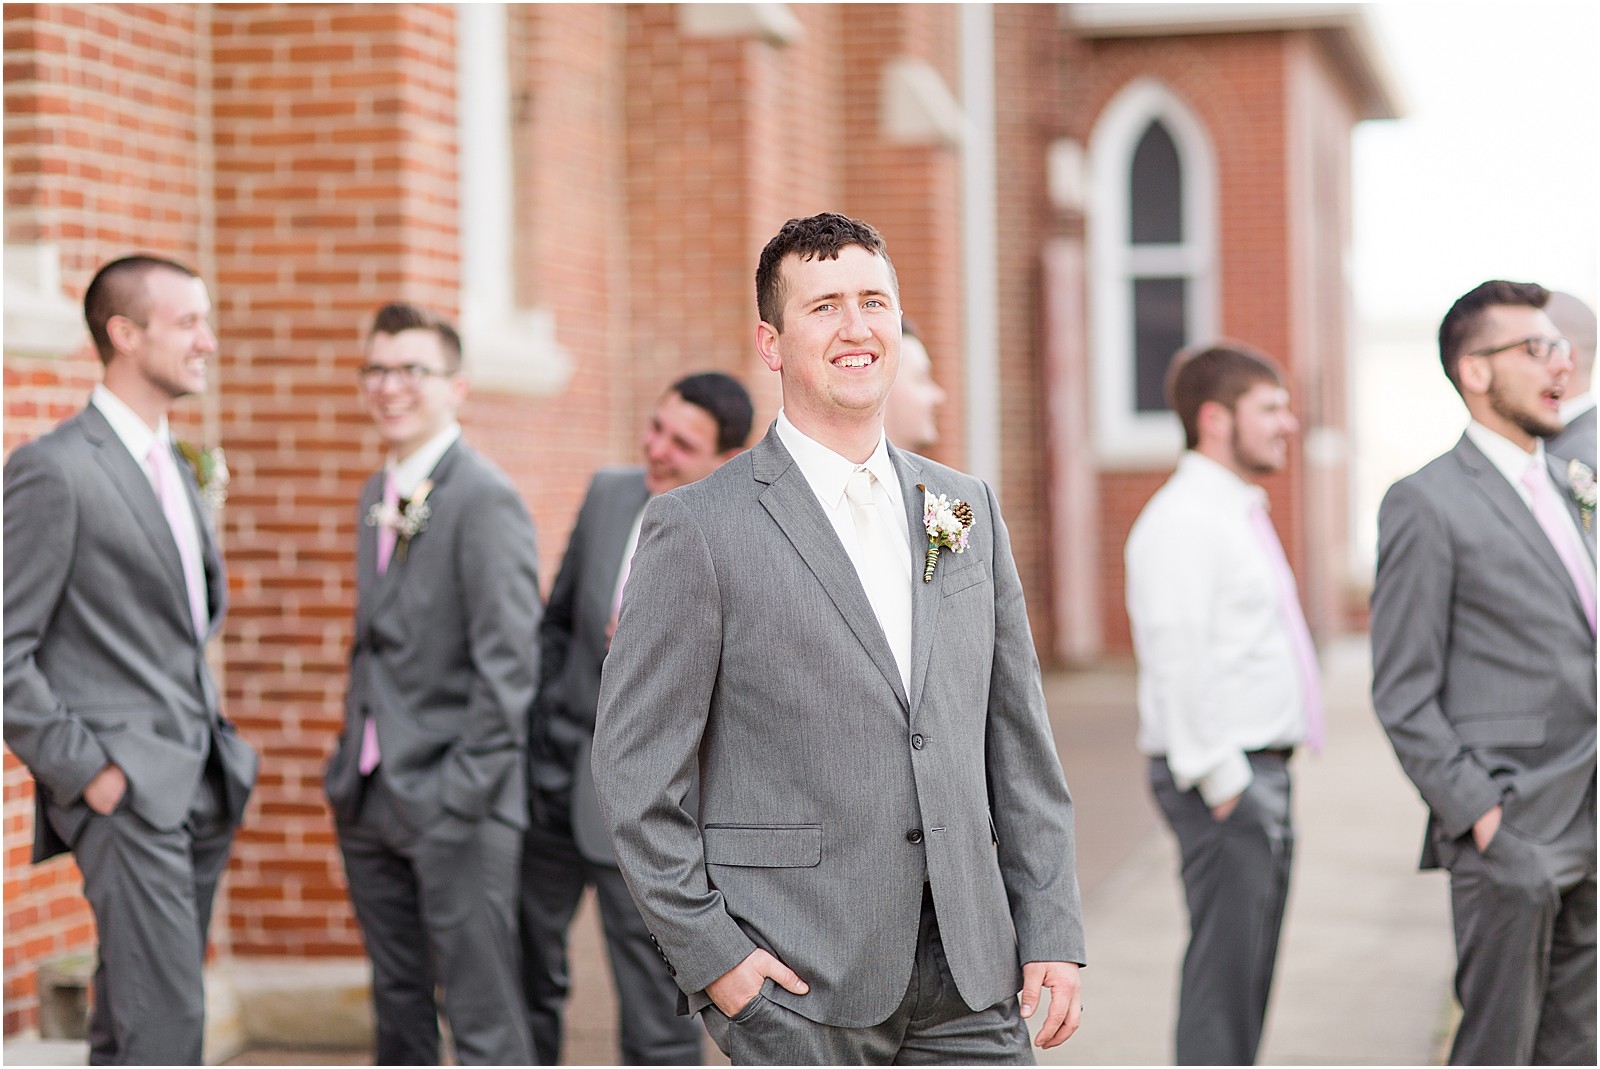 Classic Catholic Wedding | Evansville Photographer | Bret and Brandie 0076.jpg